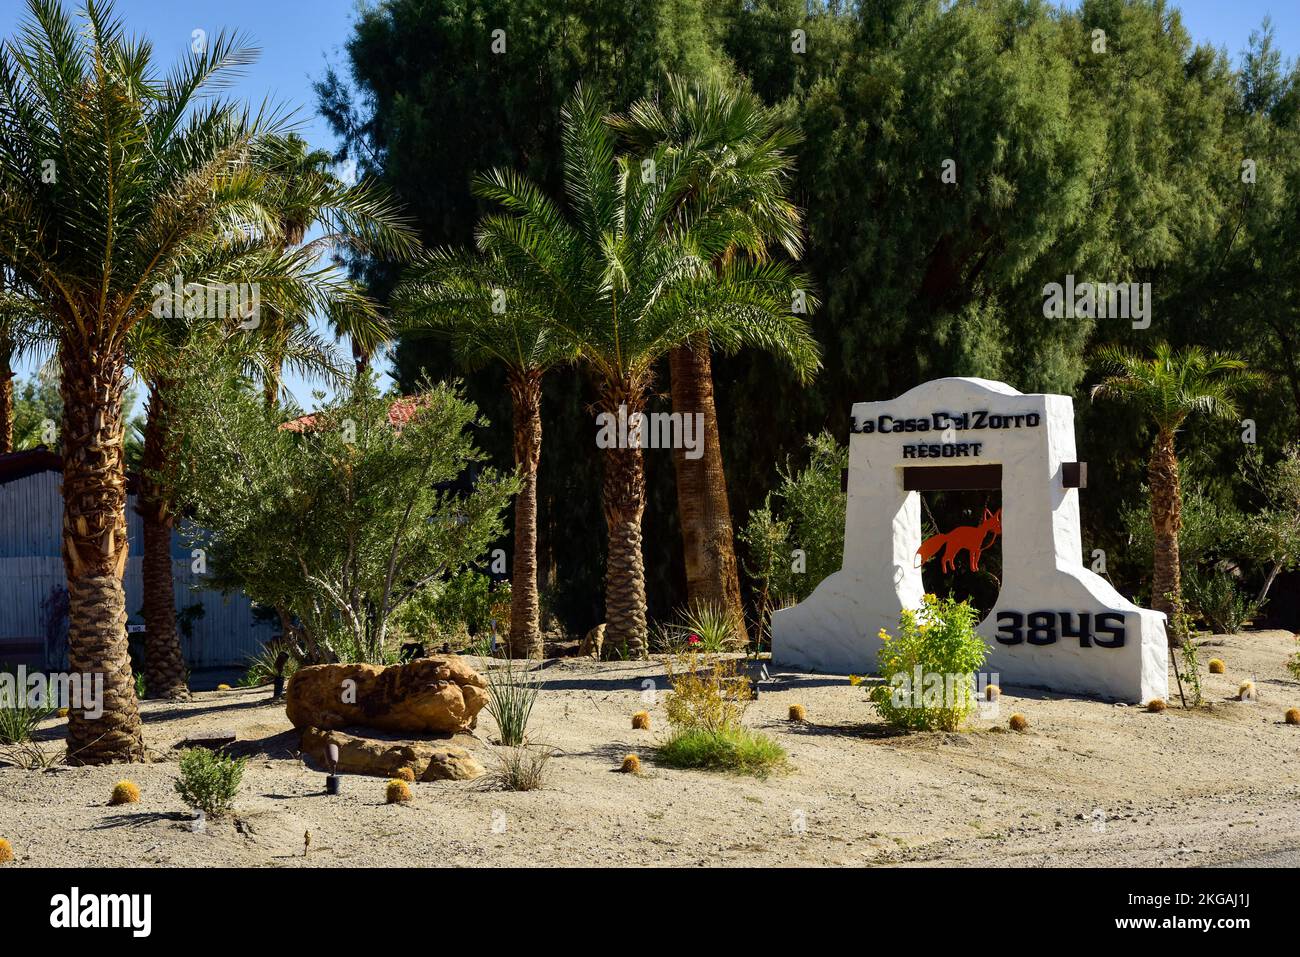 La Casa Del Zorro Resort sign  in Borrego Springs, California. Stock Photo